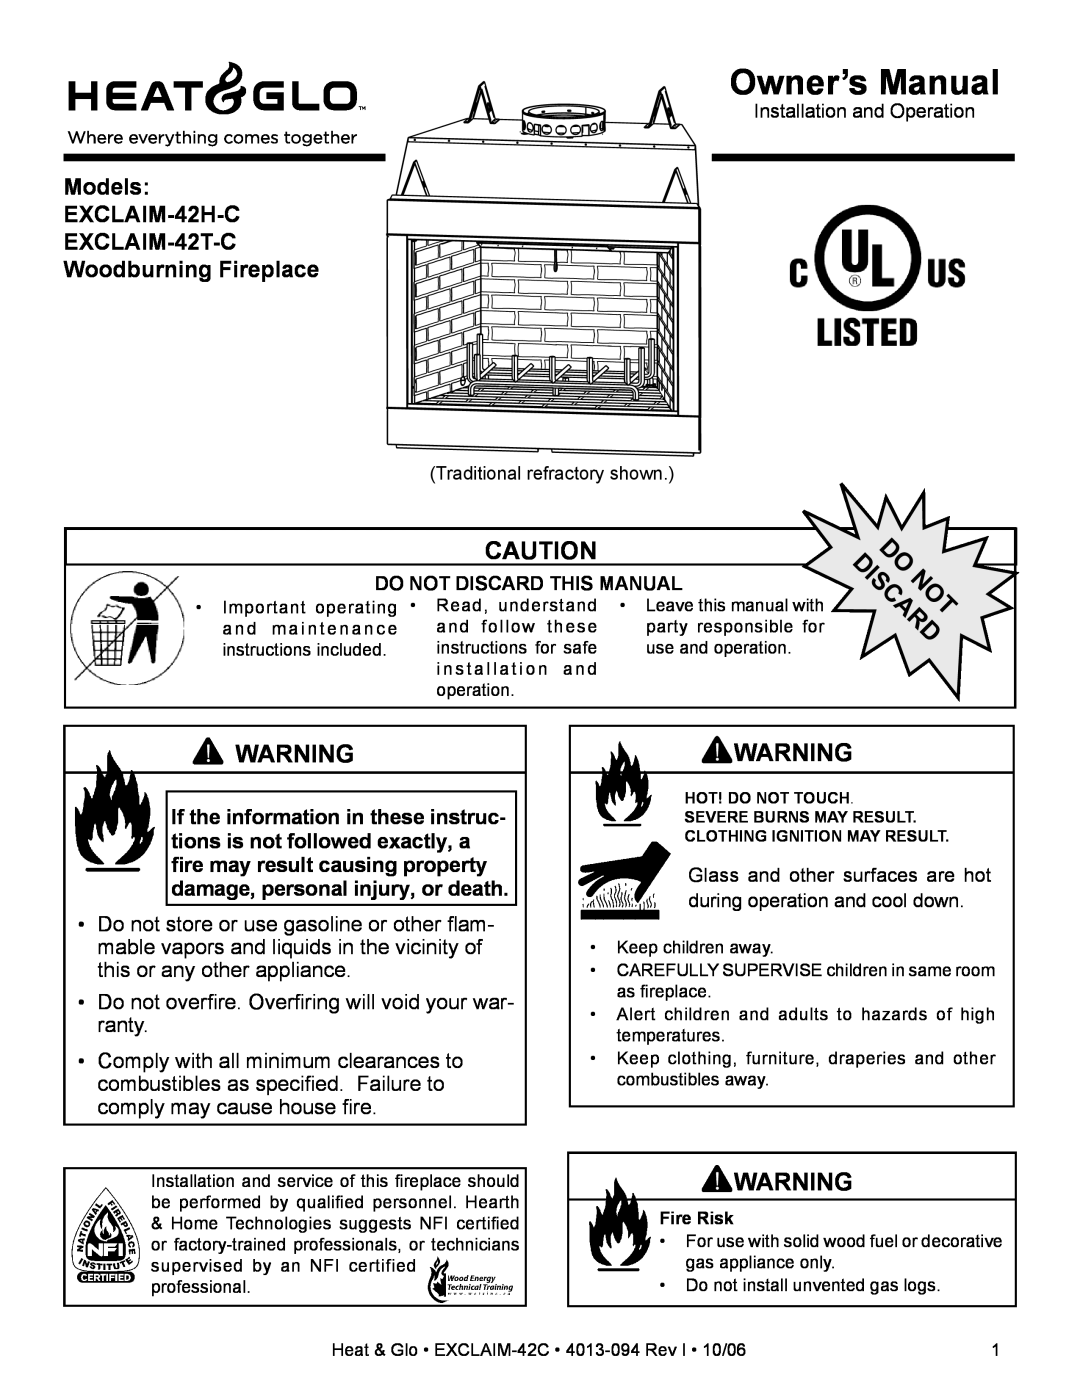 Heat & Glo LifeStyle owner manual Models EXCLAIM-42H-C EXCLAIM-42T-C, Woodburning Fireplace 